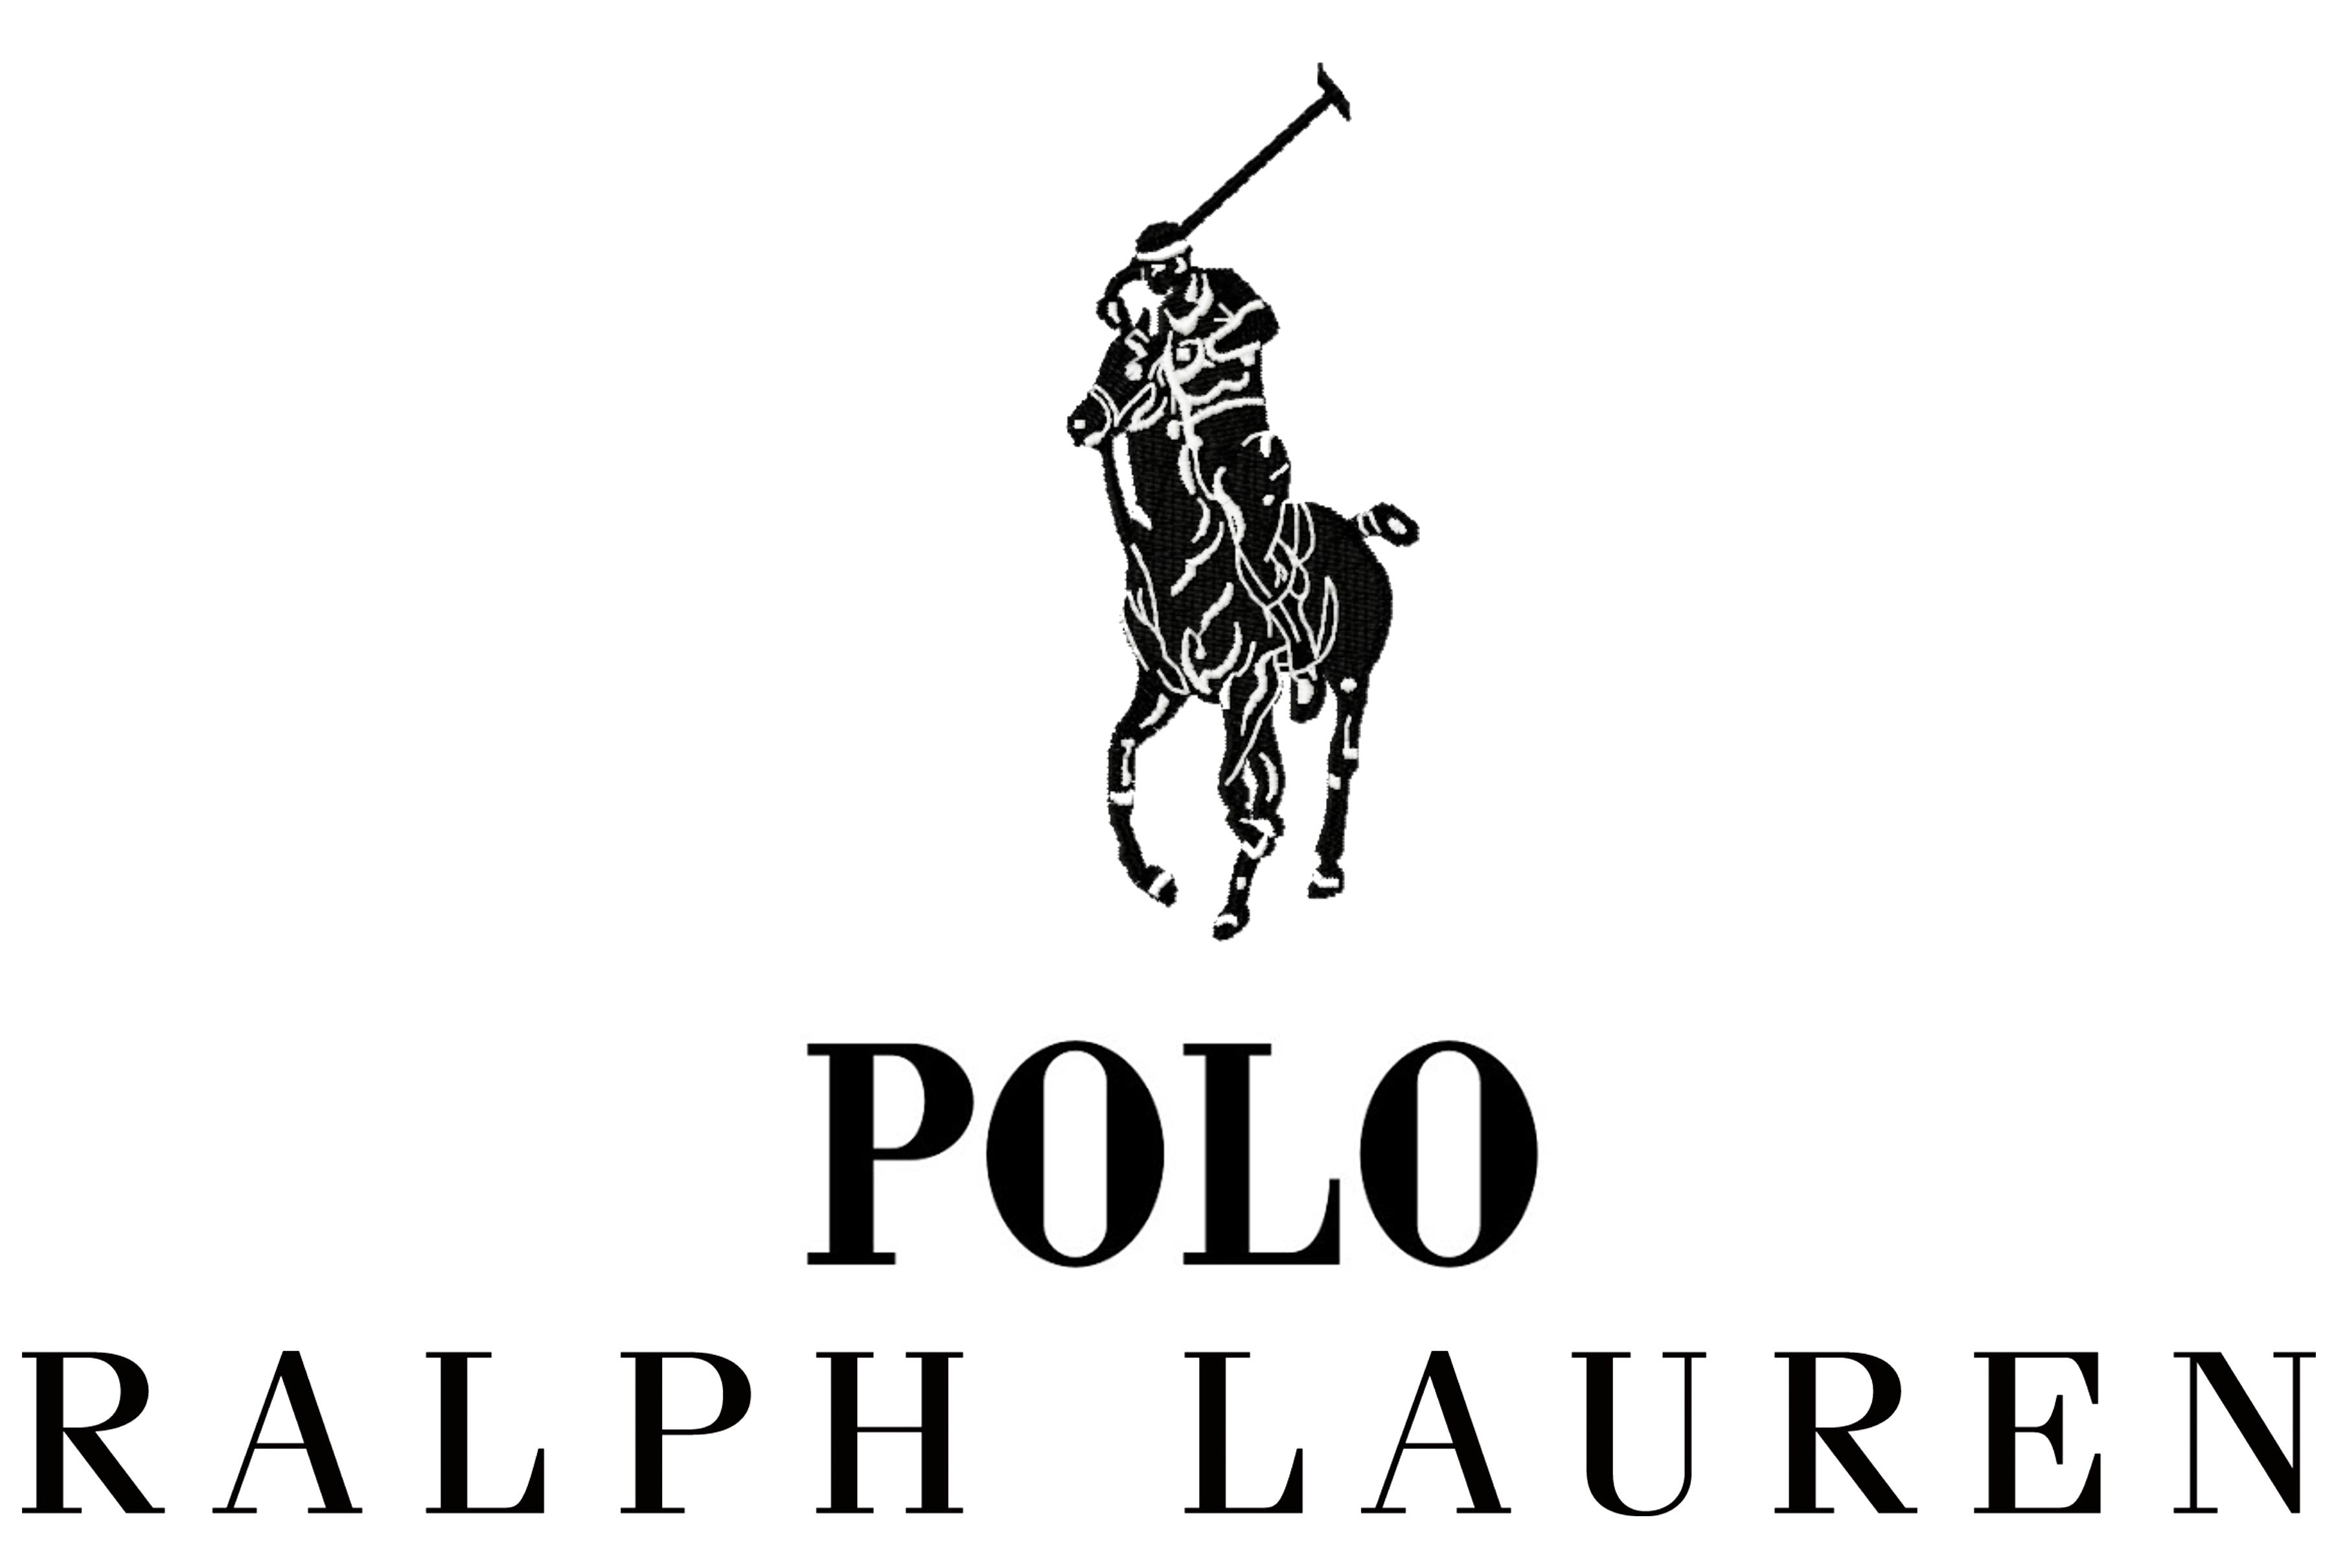 [44+] Polo Ralph Lauren Wallpaper Images | WallpaperSafari.com